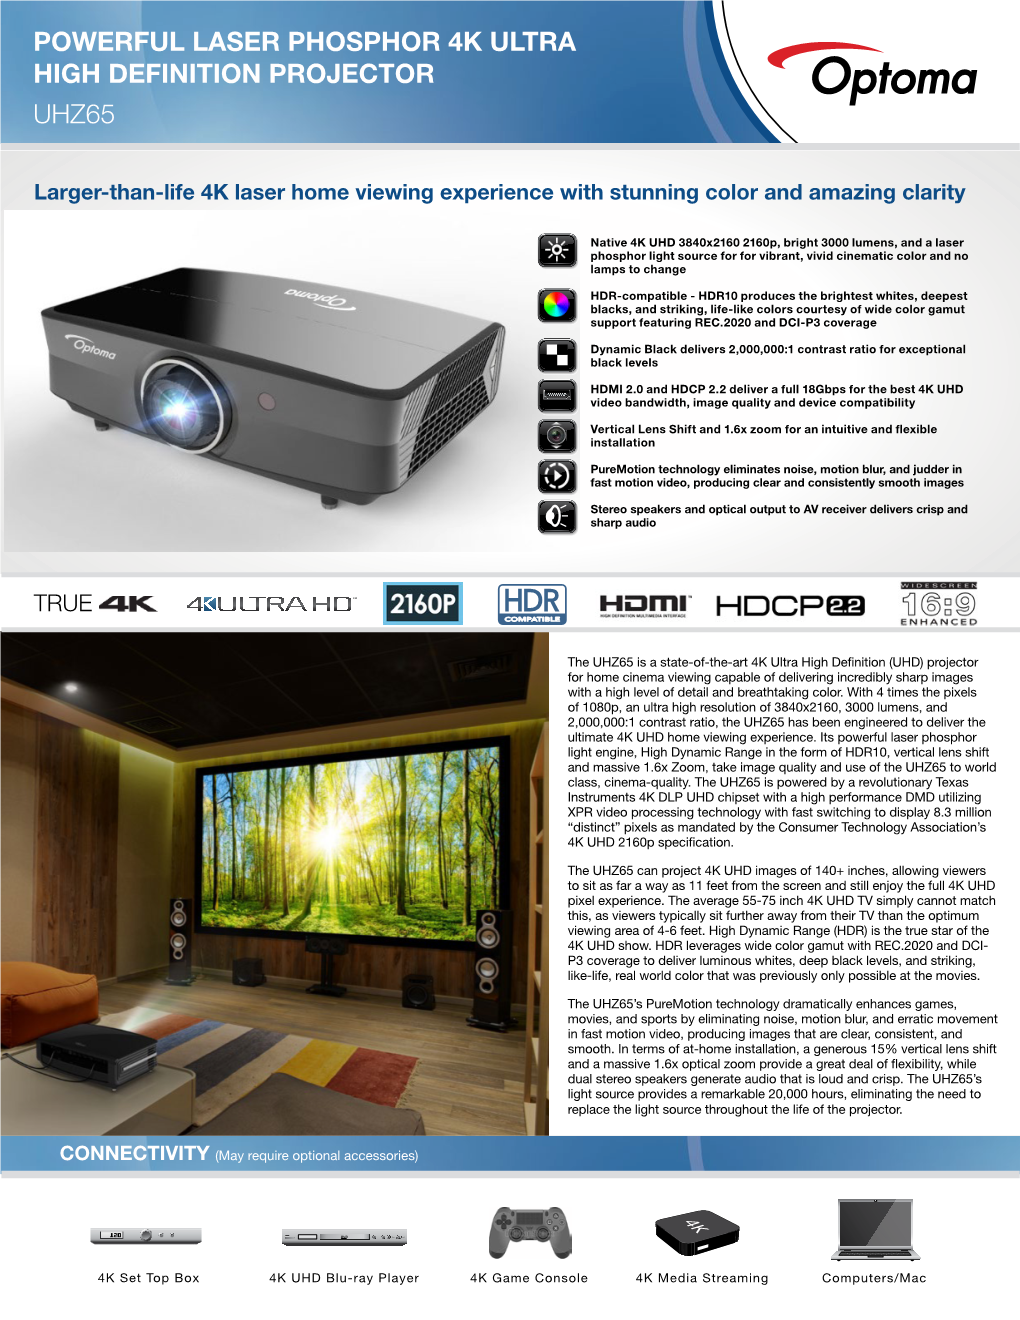 Powerful Laser Phosphor 4K Ultra High Definition Projector Uhz65